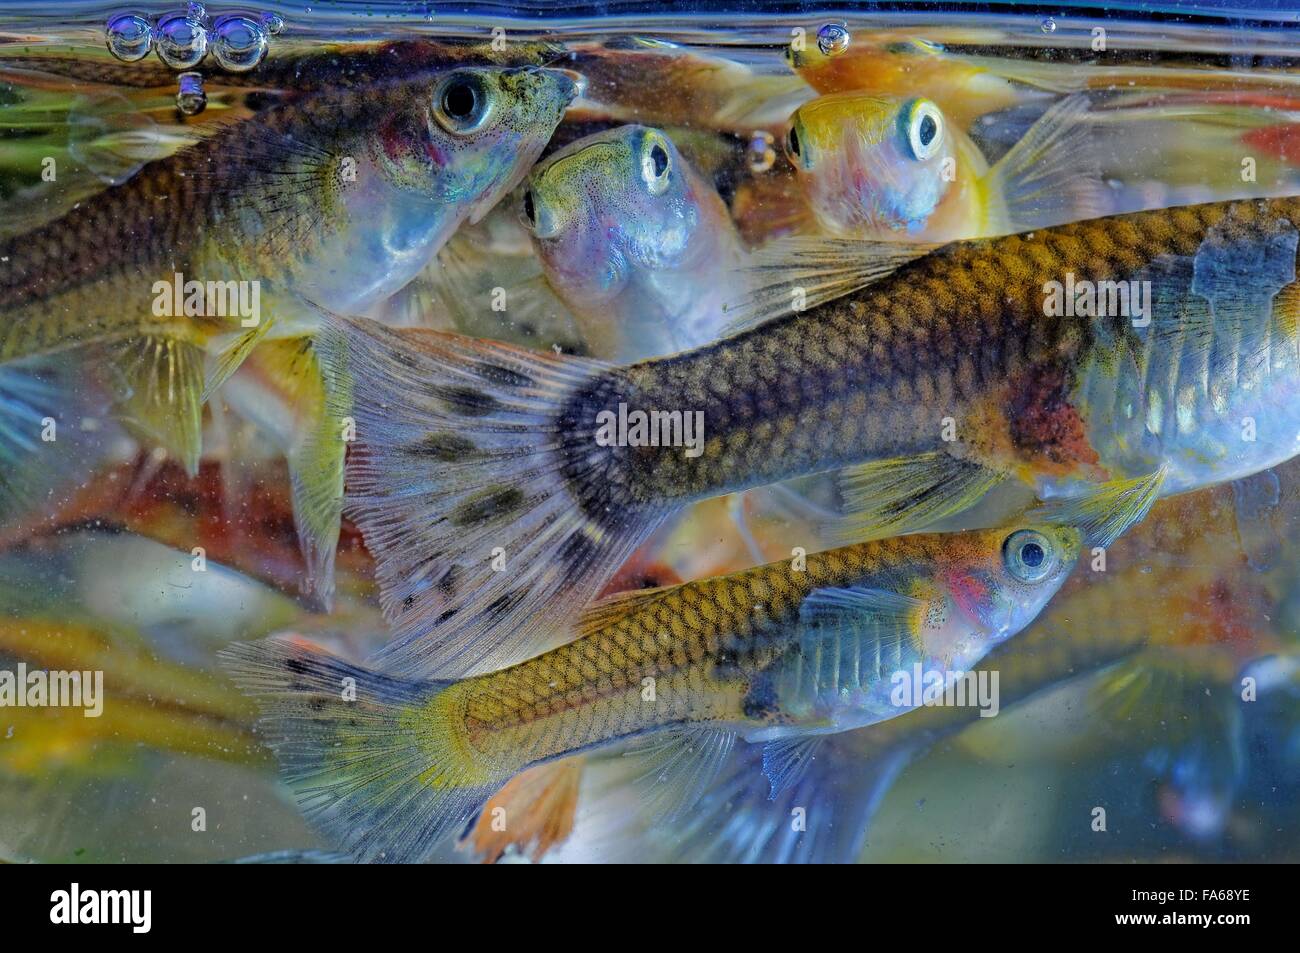 School of guppy fish Stock Photo